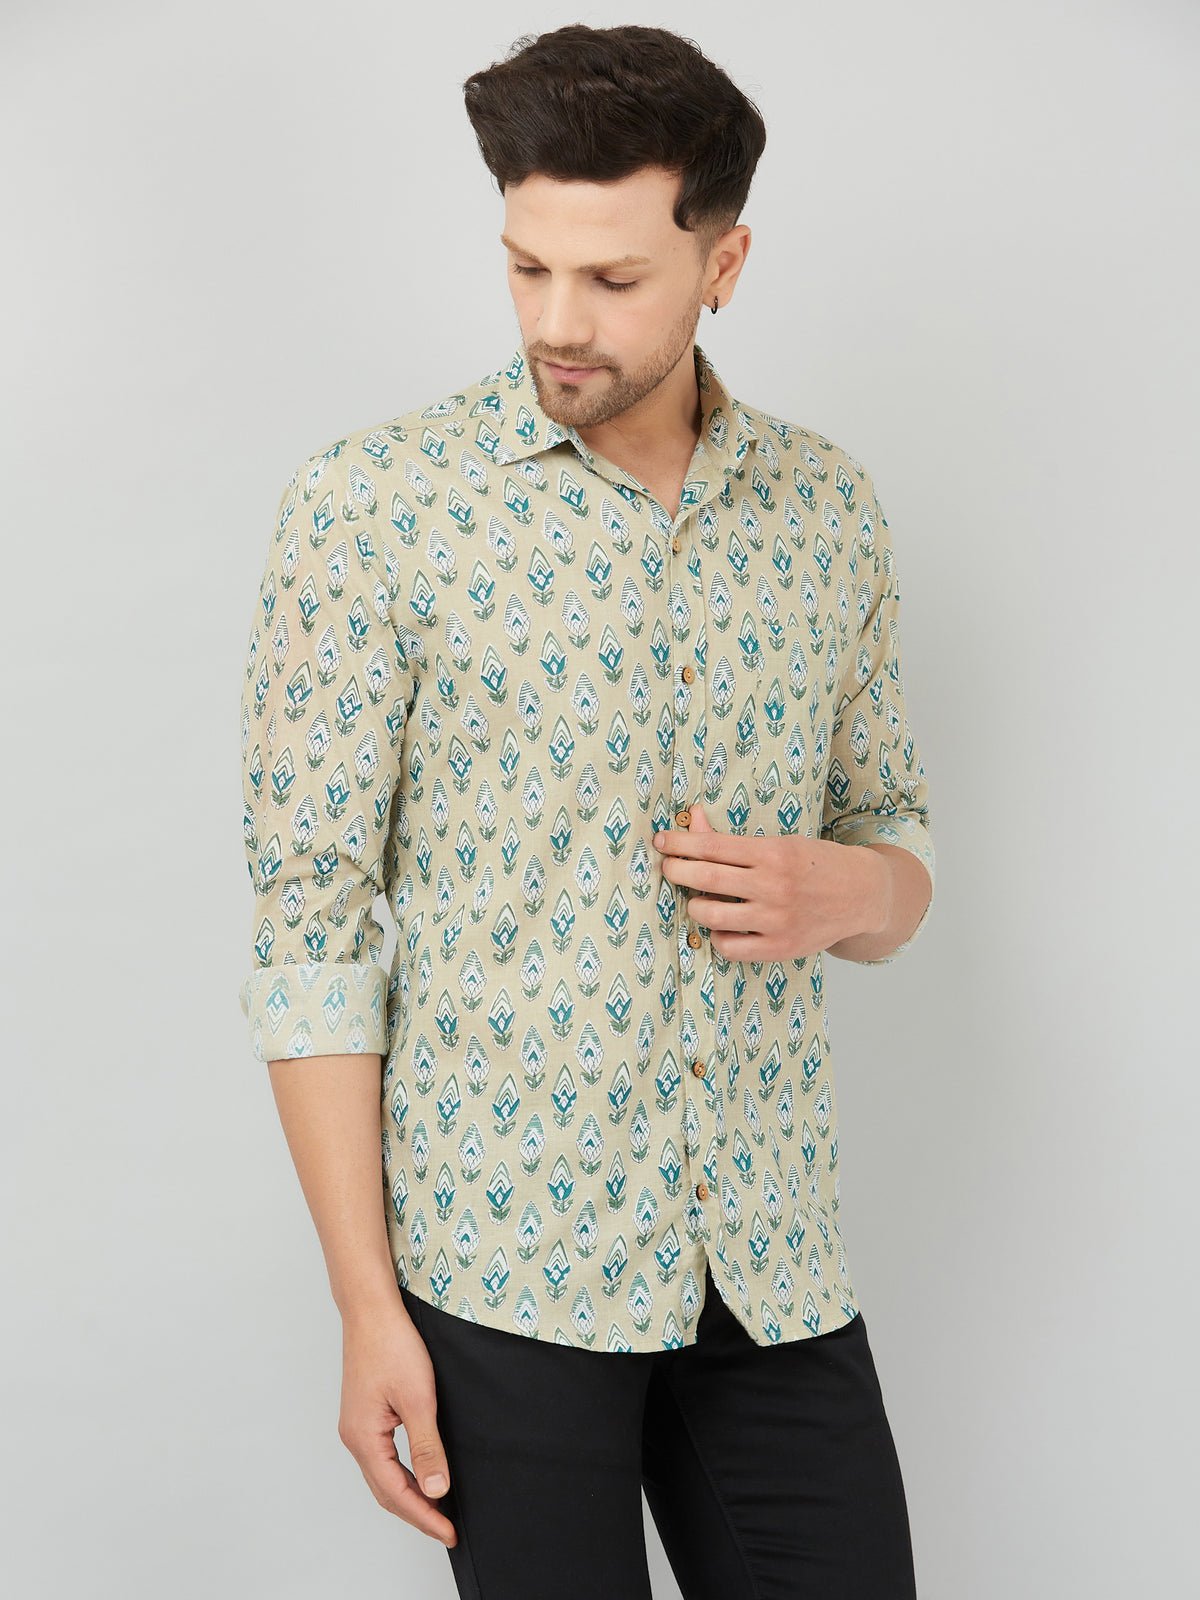 Louis Monarch Premium Camel Jaipuri Printed Cotton Casual Shirt